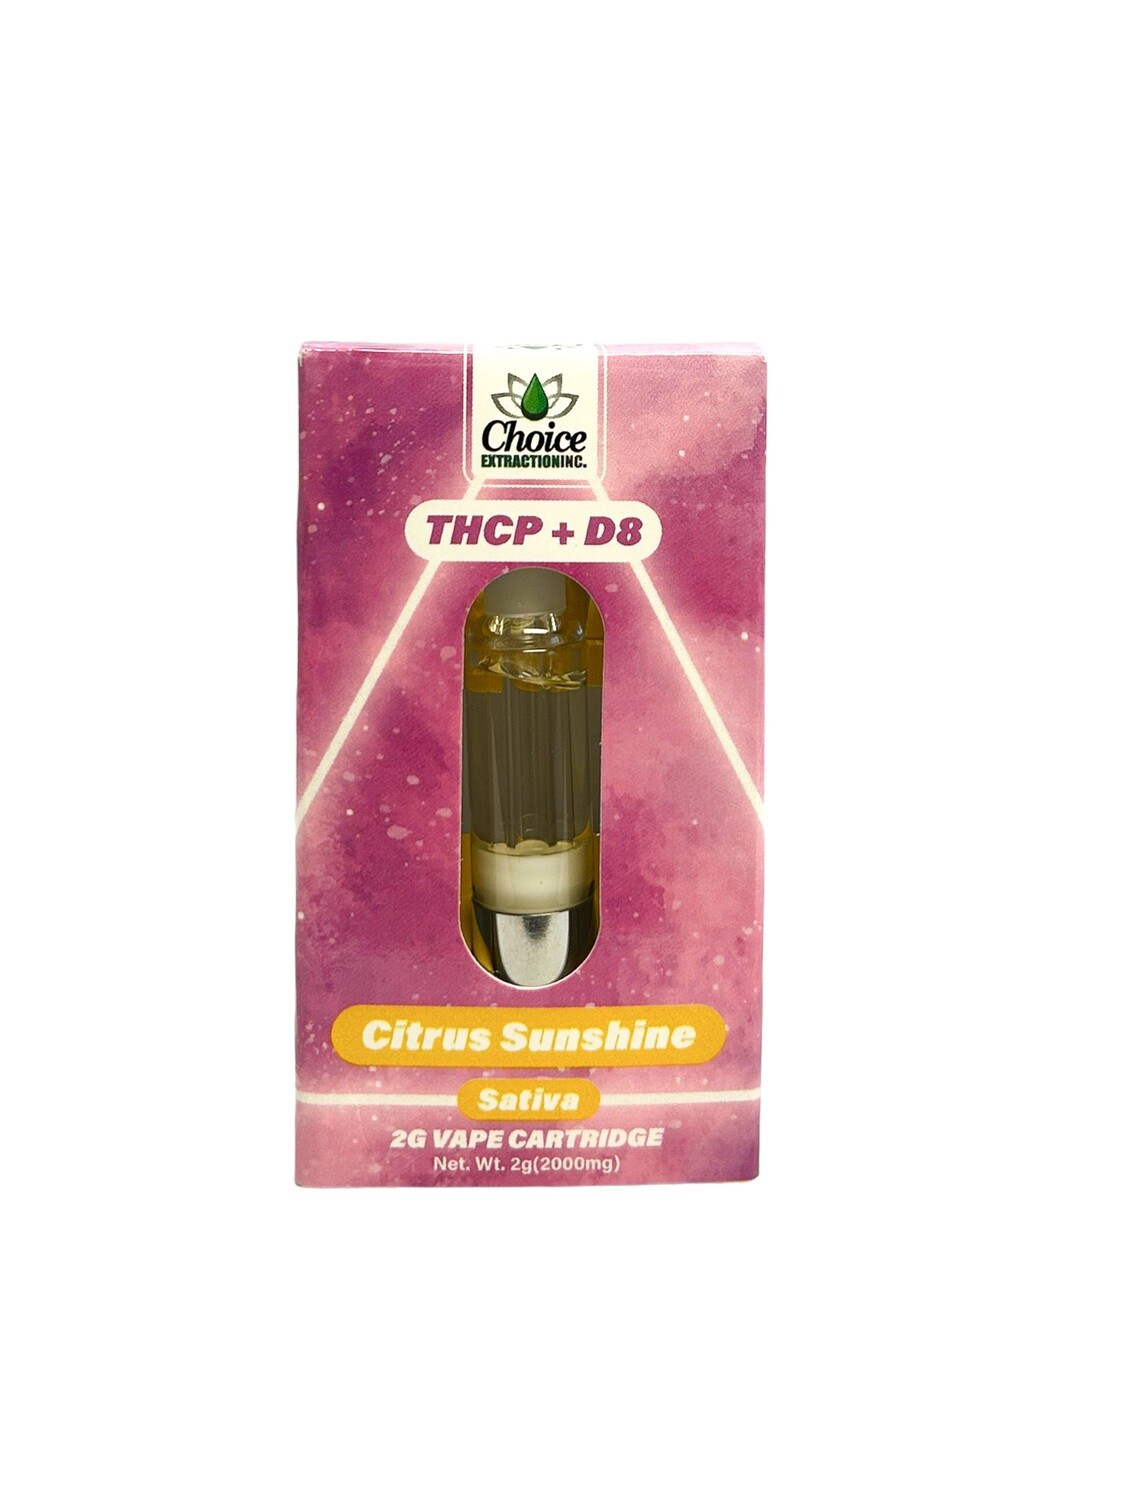 THCP + D8 Vape Cart - Citrus Sunshine 2mL - Sativa